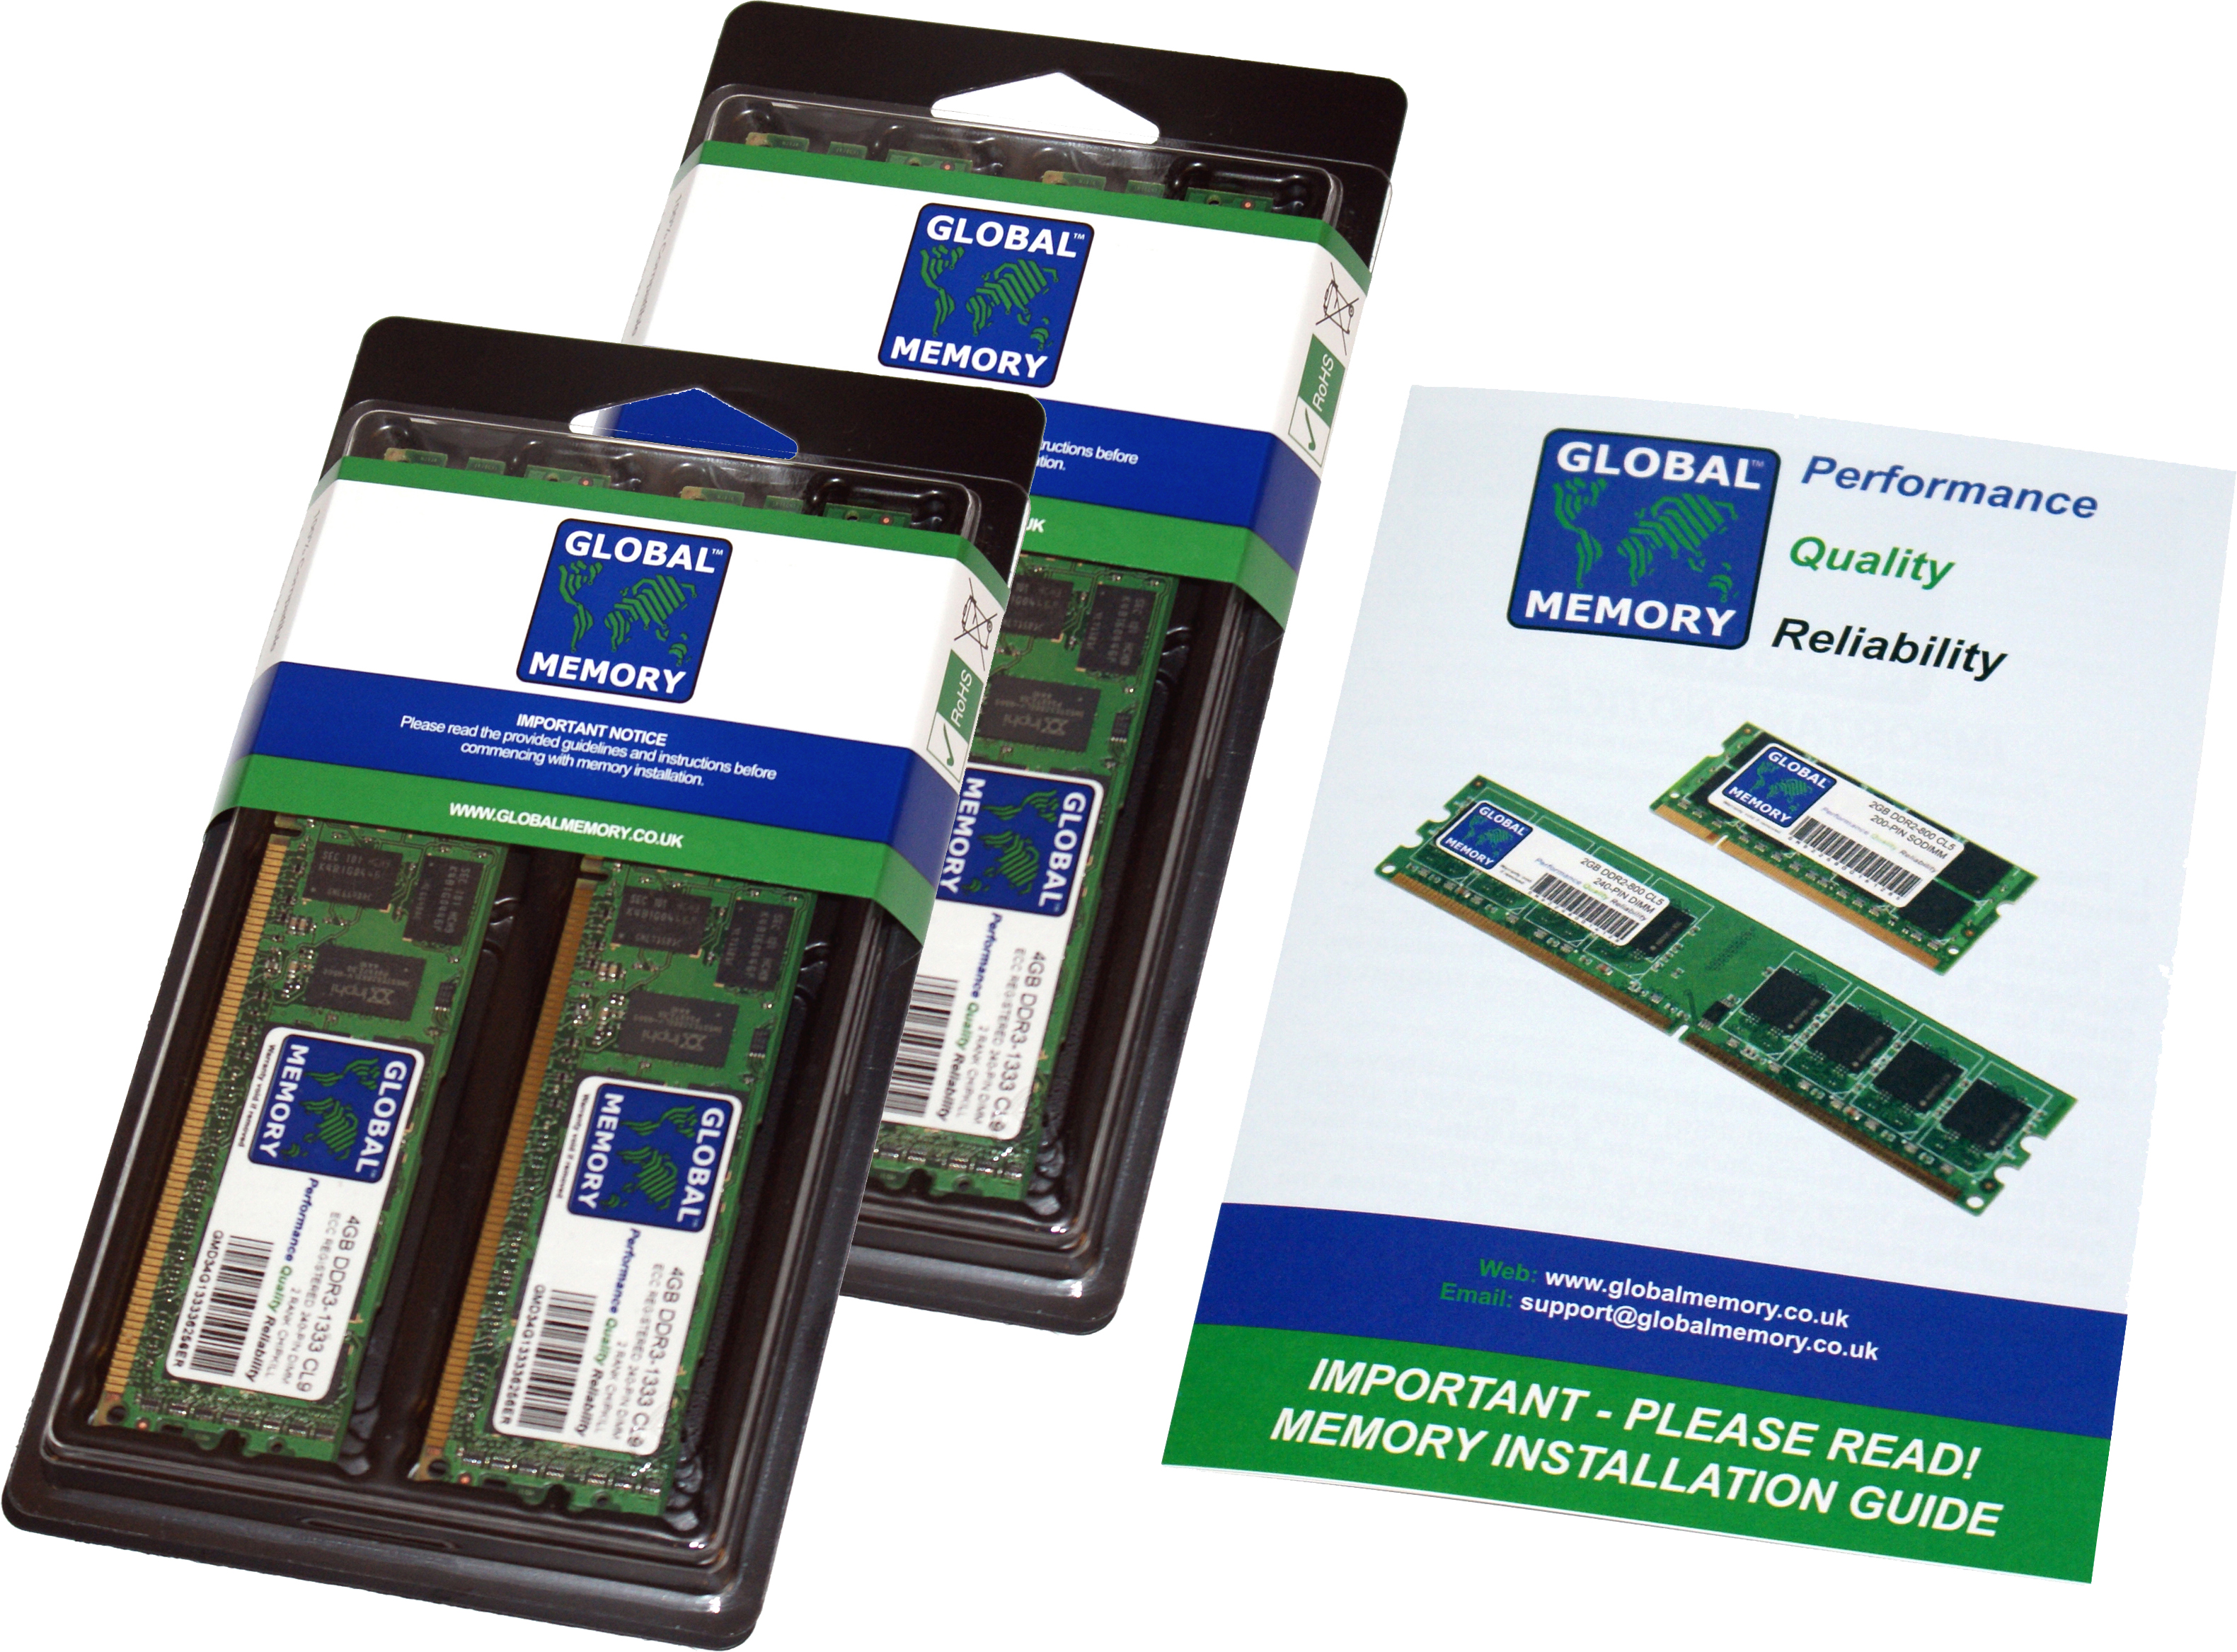 64GB (2 x 32GB) DDR4 2400MHz PC4-19200 288-PIN ECC REGISTERED DIMM (RDIMM) MEMORY RAM KIT FOR DELL SERVERS/WORKSTATIONS (4 RANK KIT CHIPKILL)